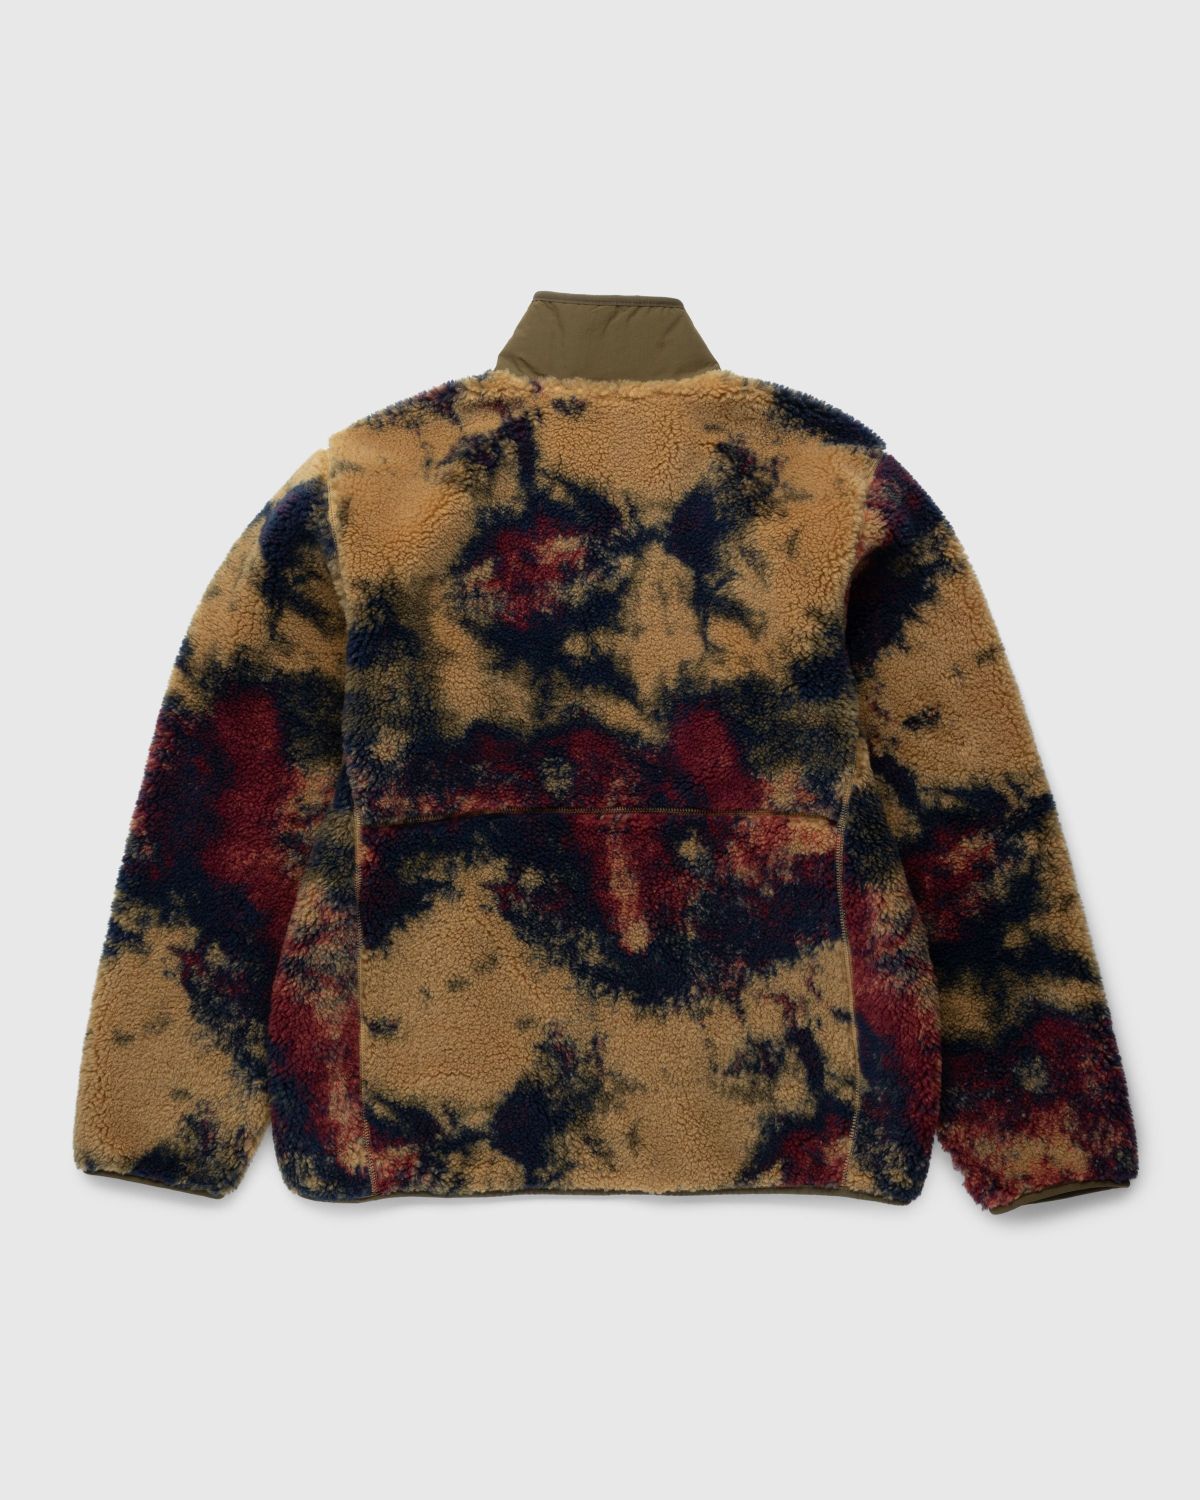 The North Face – Jacquard Extreme Pile Full-Zip Jacket Antelope Tan/Ice Dye Print - Fleece Jackets - Multi - Image 2